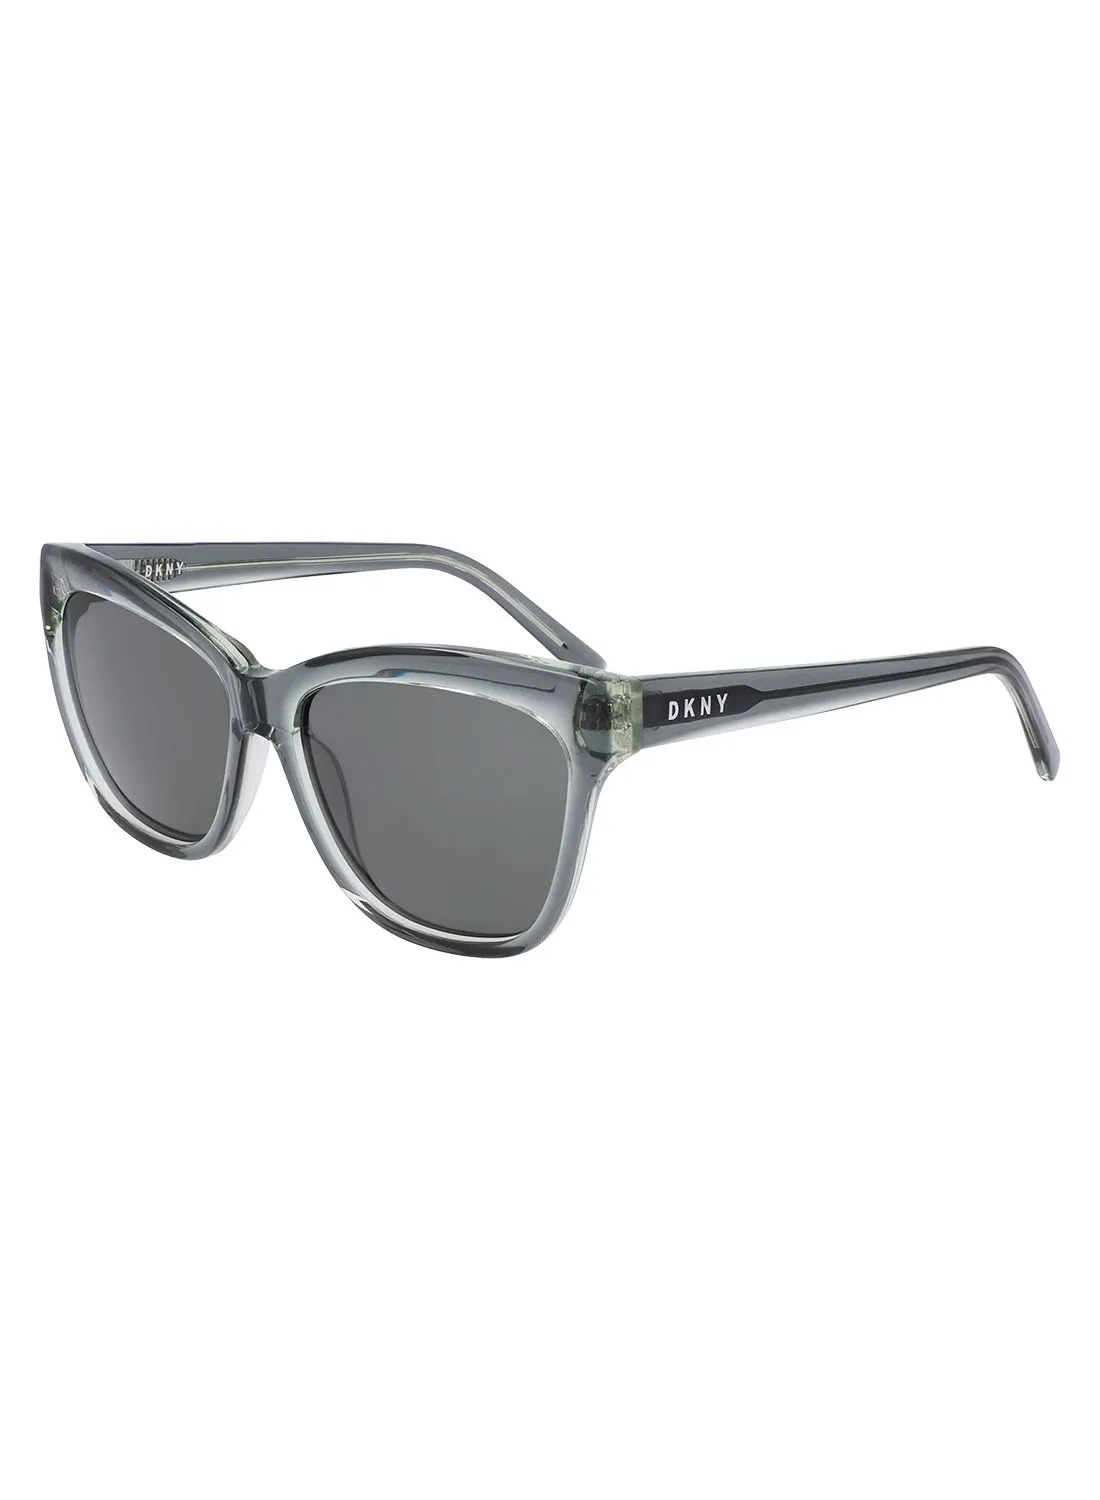 DKNY Full Rim Acetate Cat Eye Sunglasses Dk543S 5516 (310) Sage Laminate